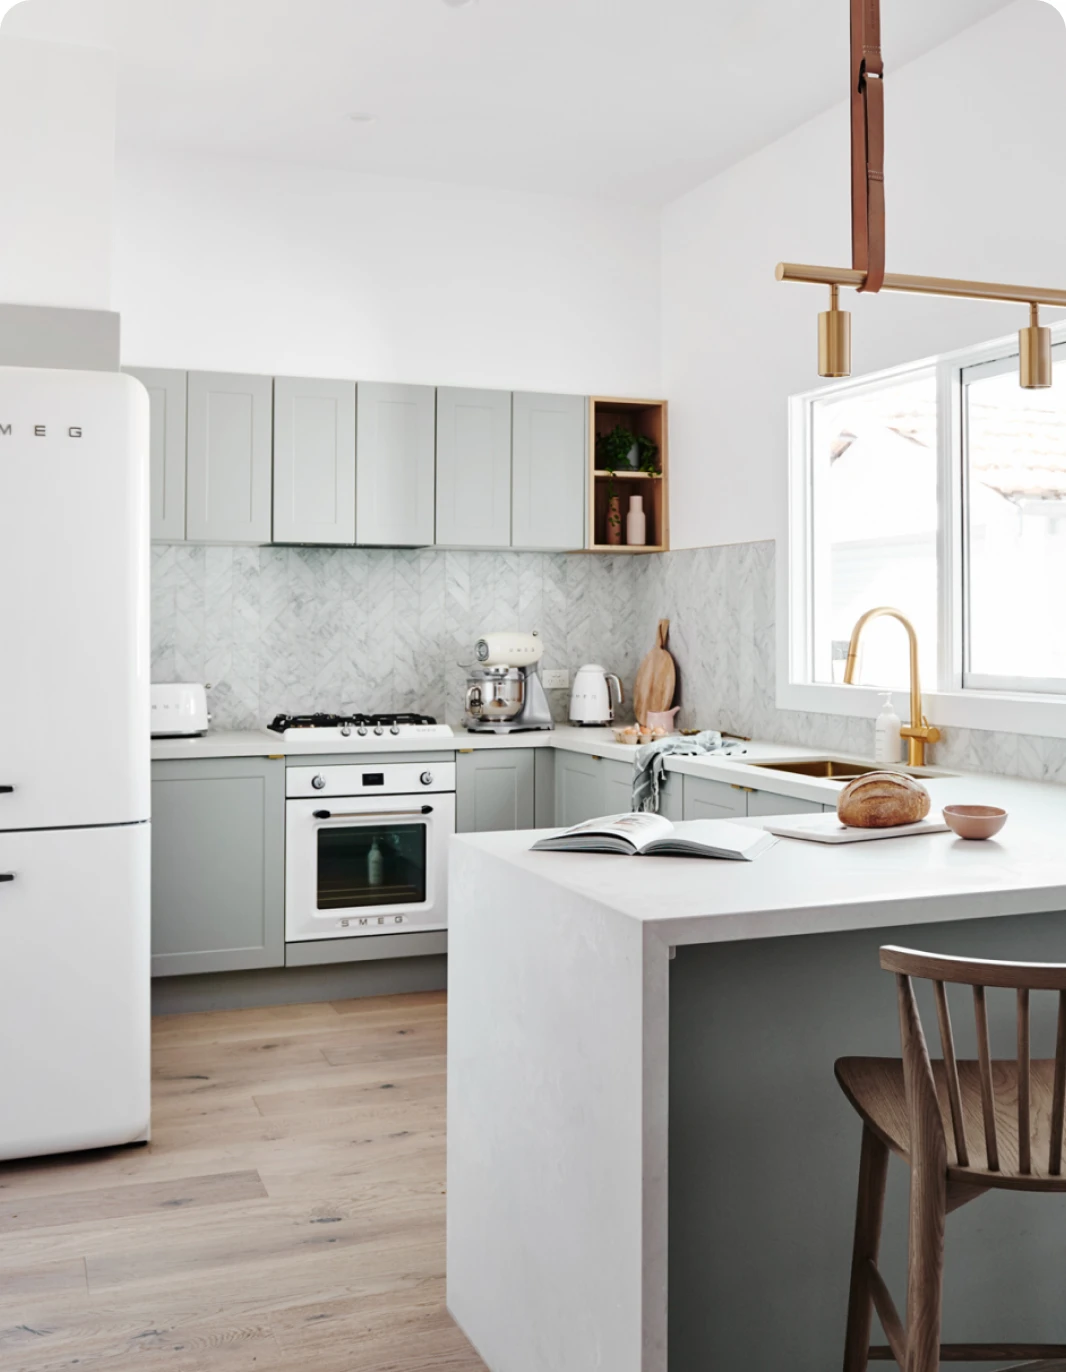 Neutral coloured kitchen with white Smeg fridge and wooden floor